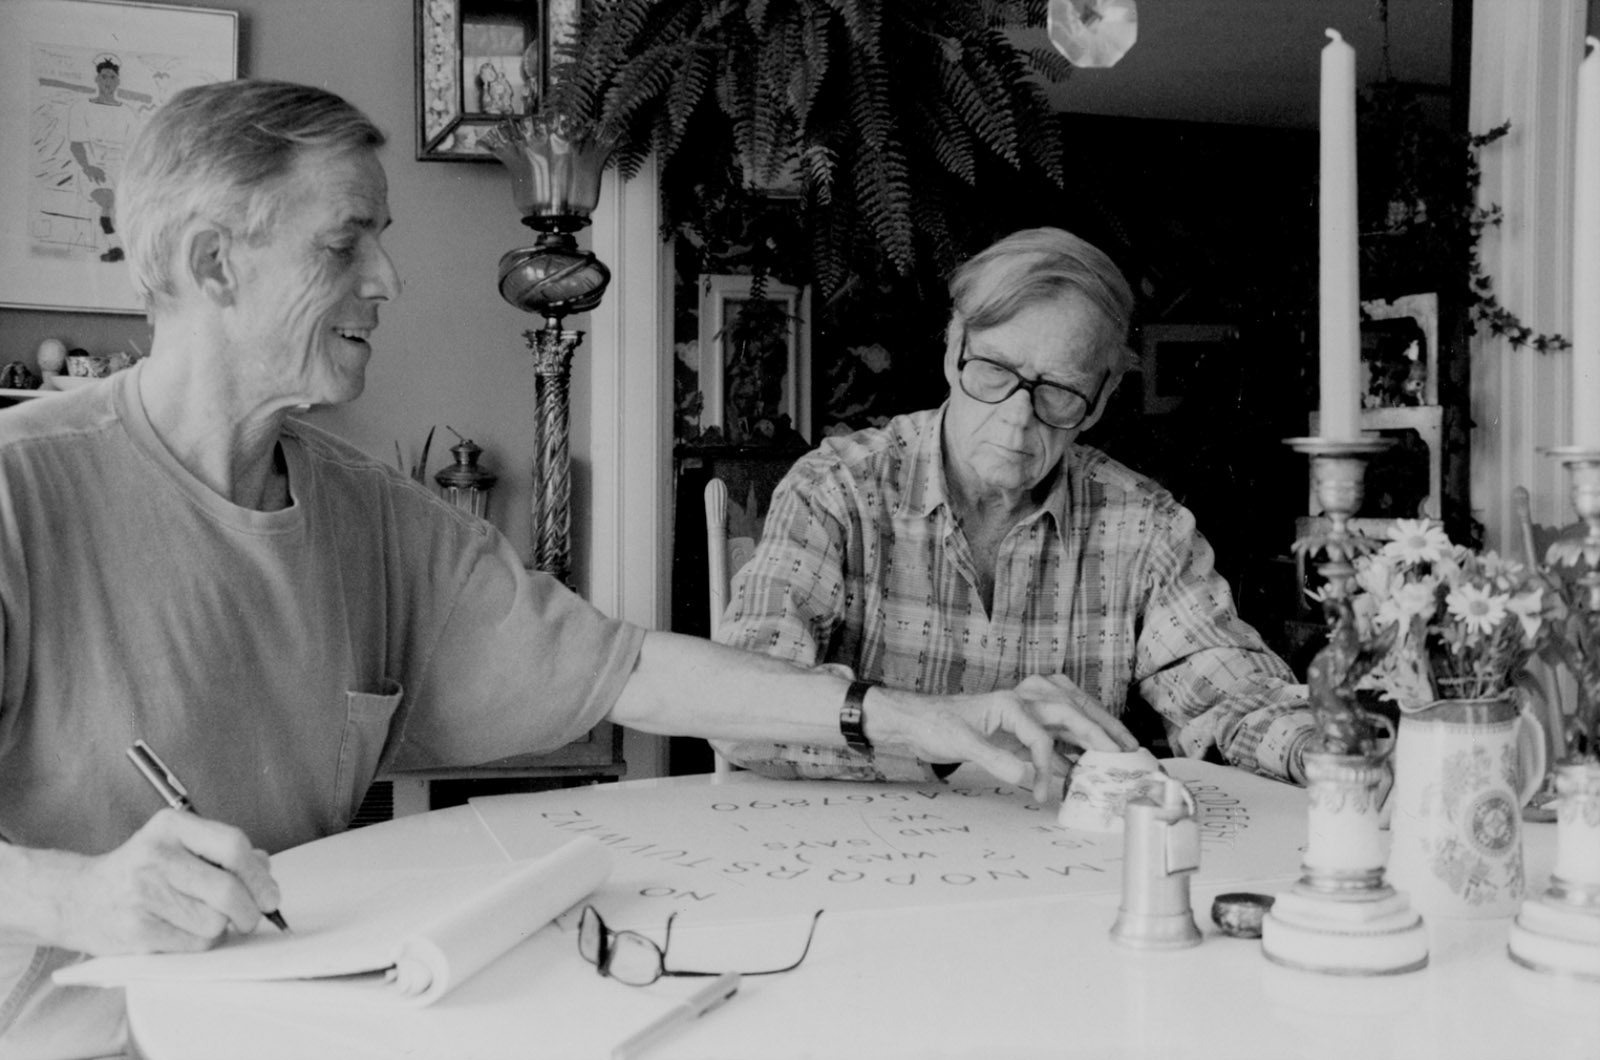 James Merrill and David Jackson at the Ouija board, Stonington, Connecticut, 1983